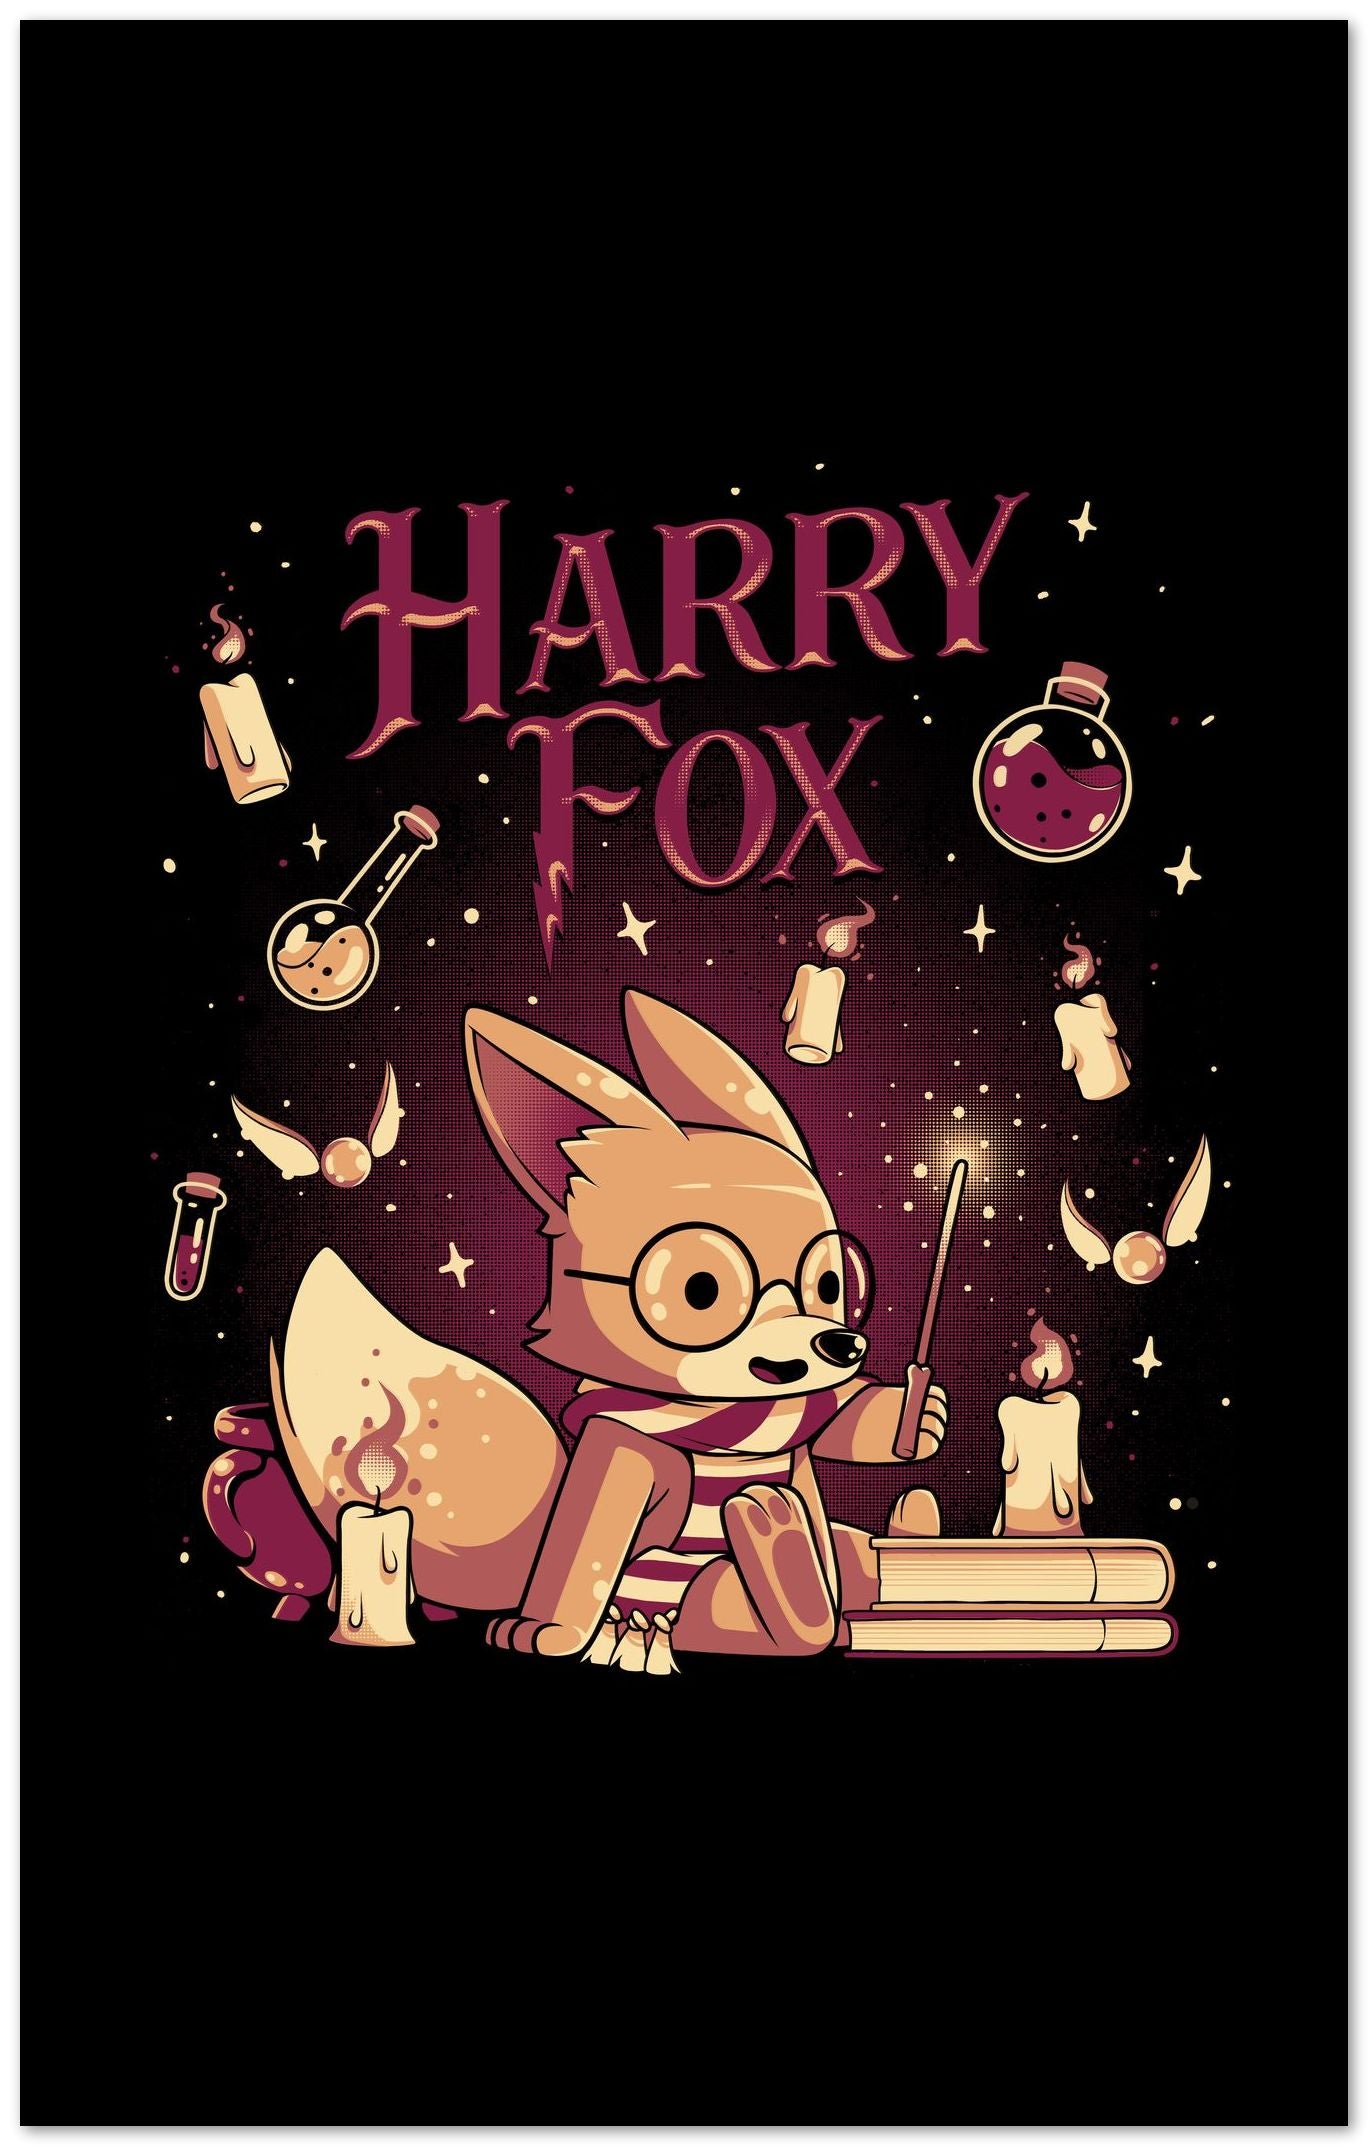 Harry Fox - @Ilustrata